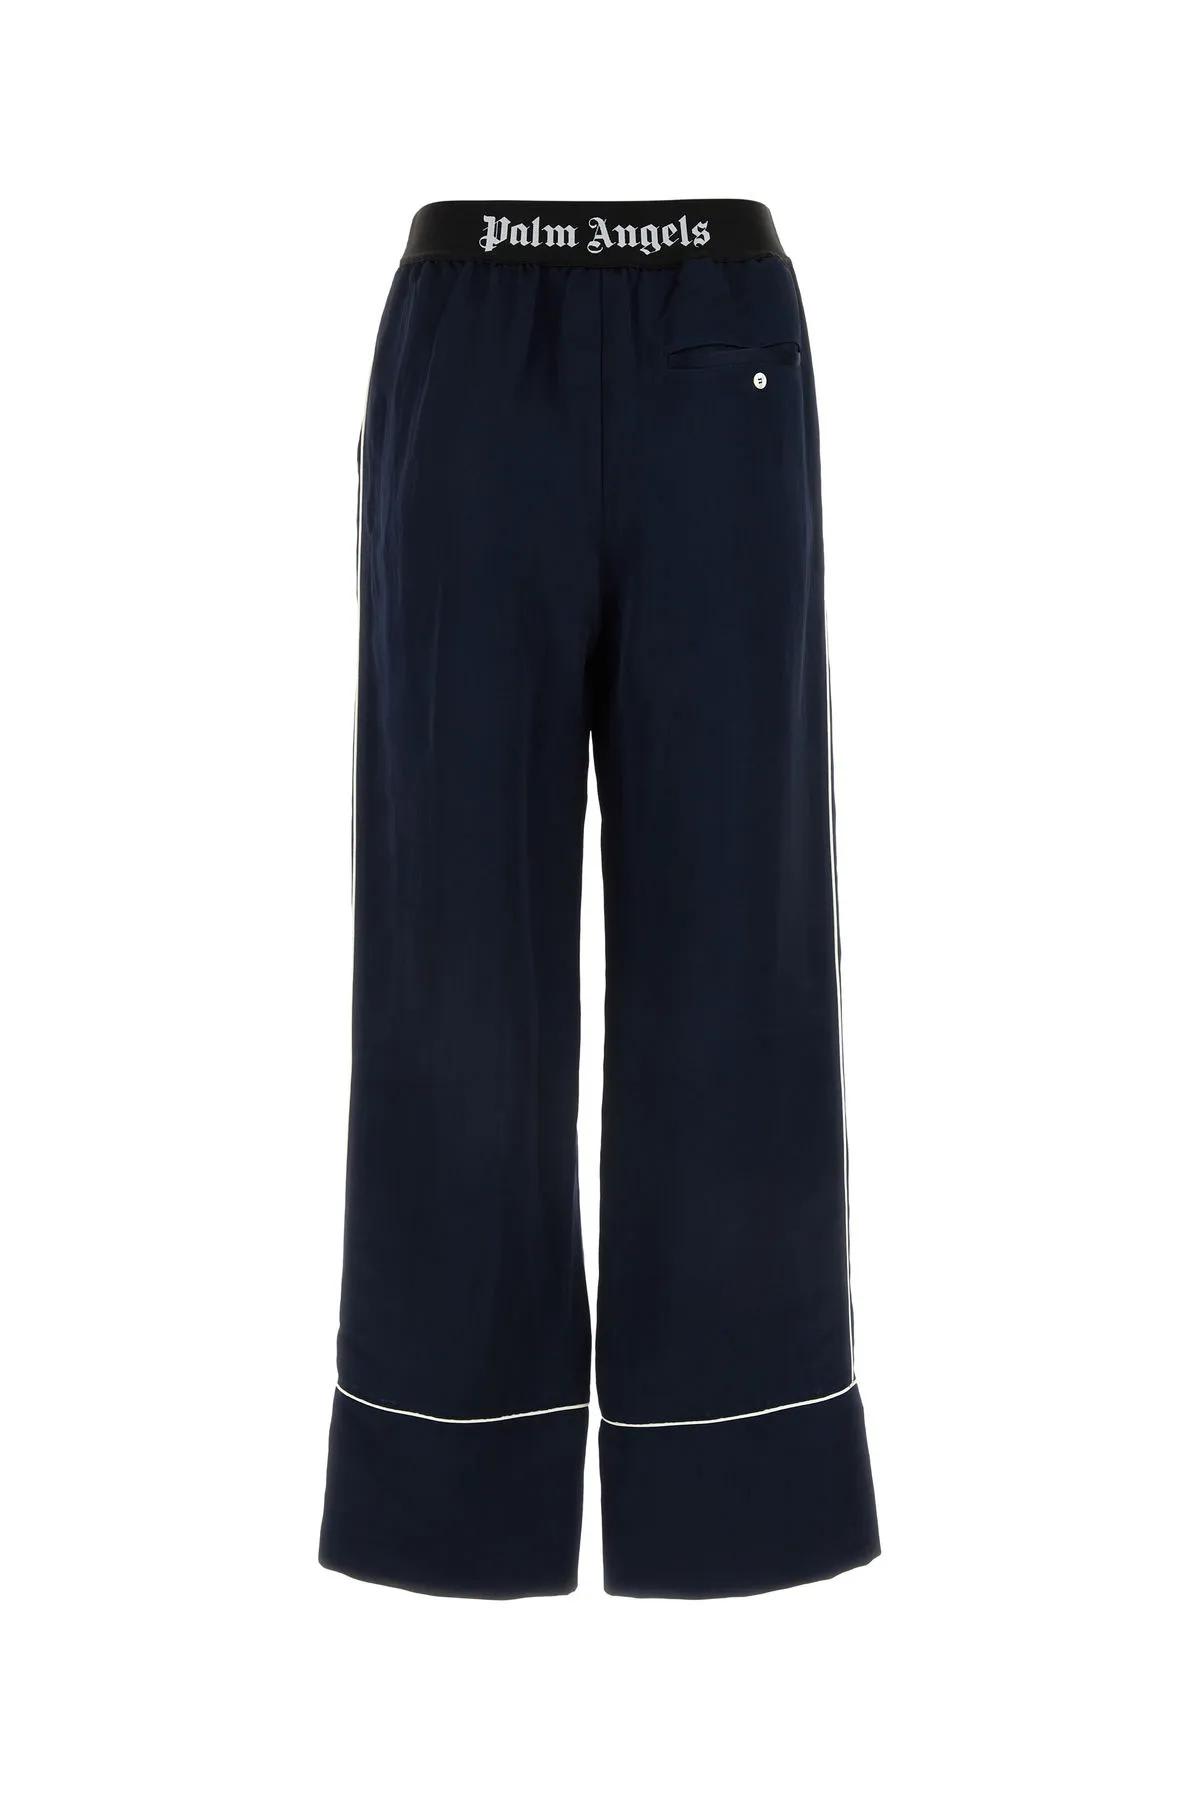 Shop Palm Angels Navy Blue Satin Pyjama Pant